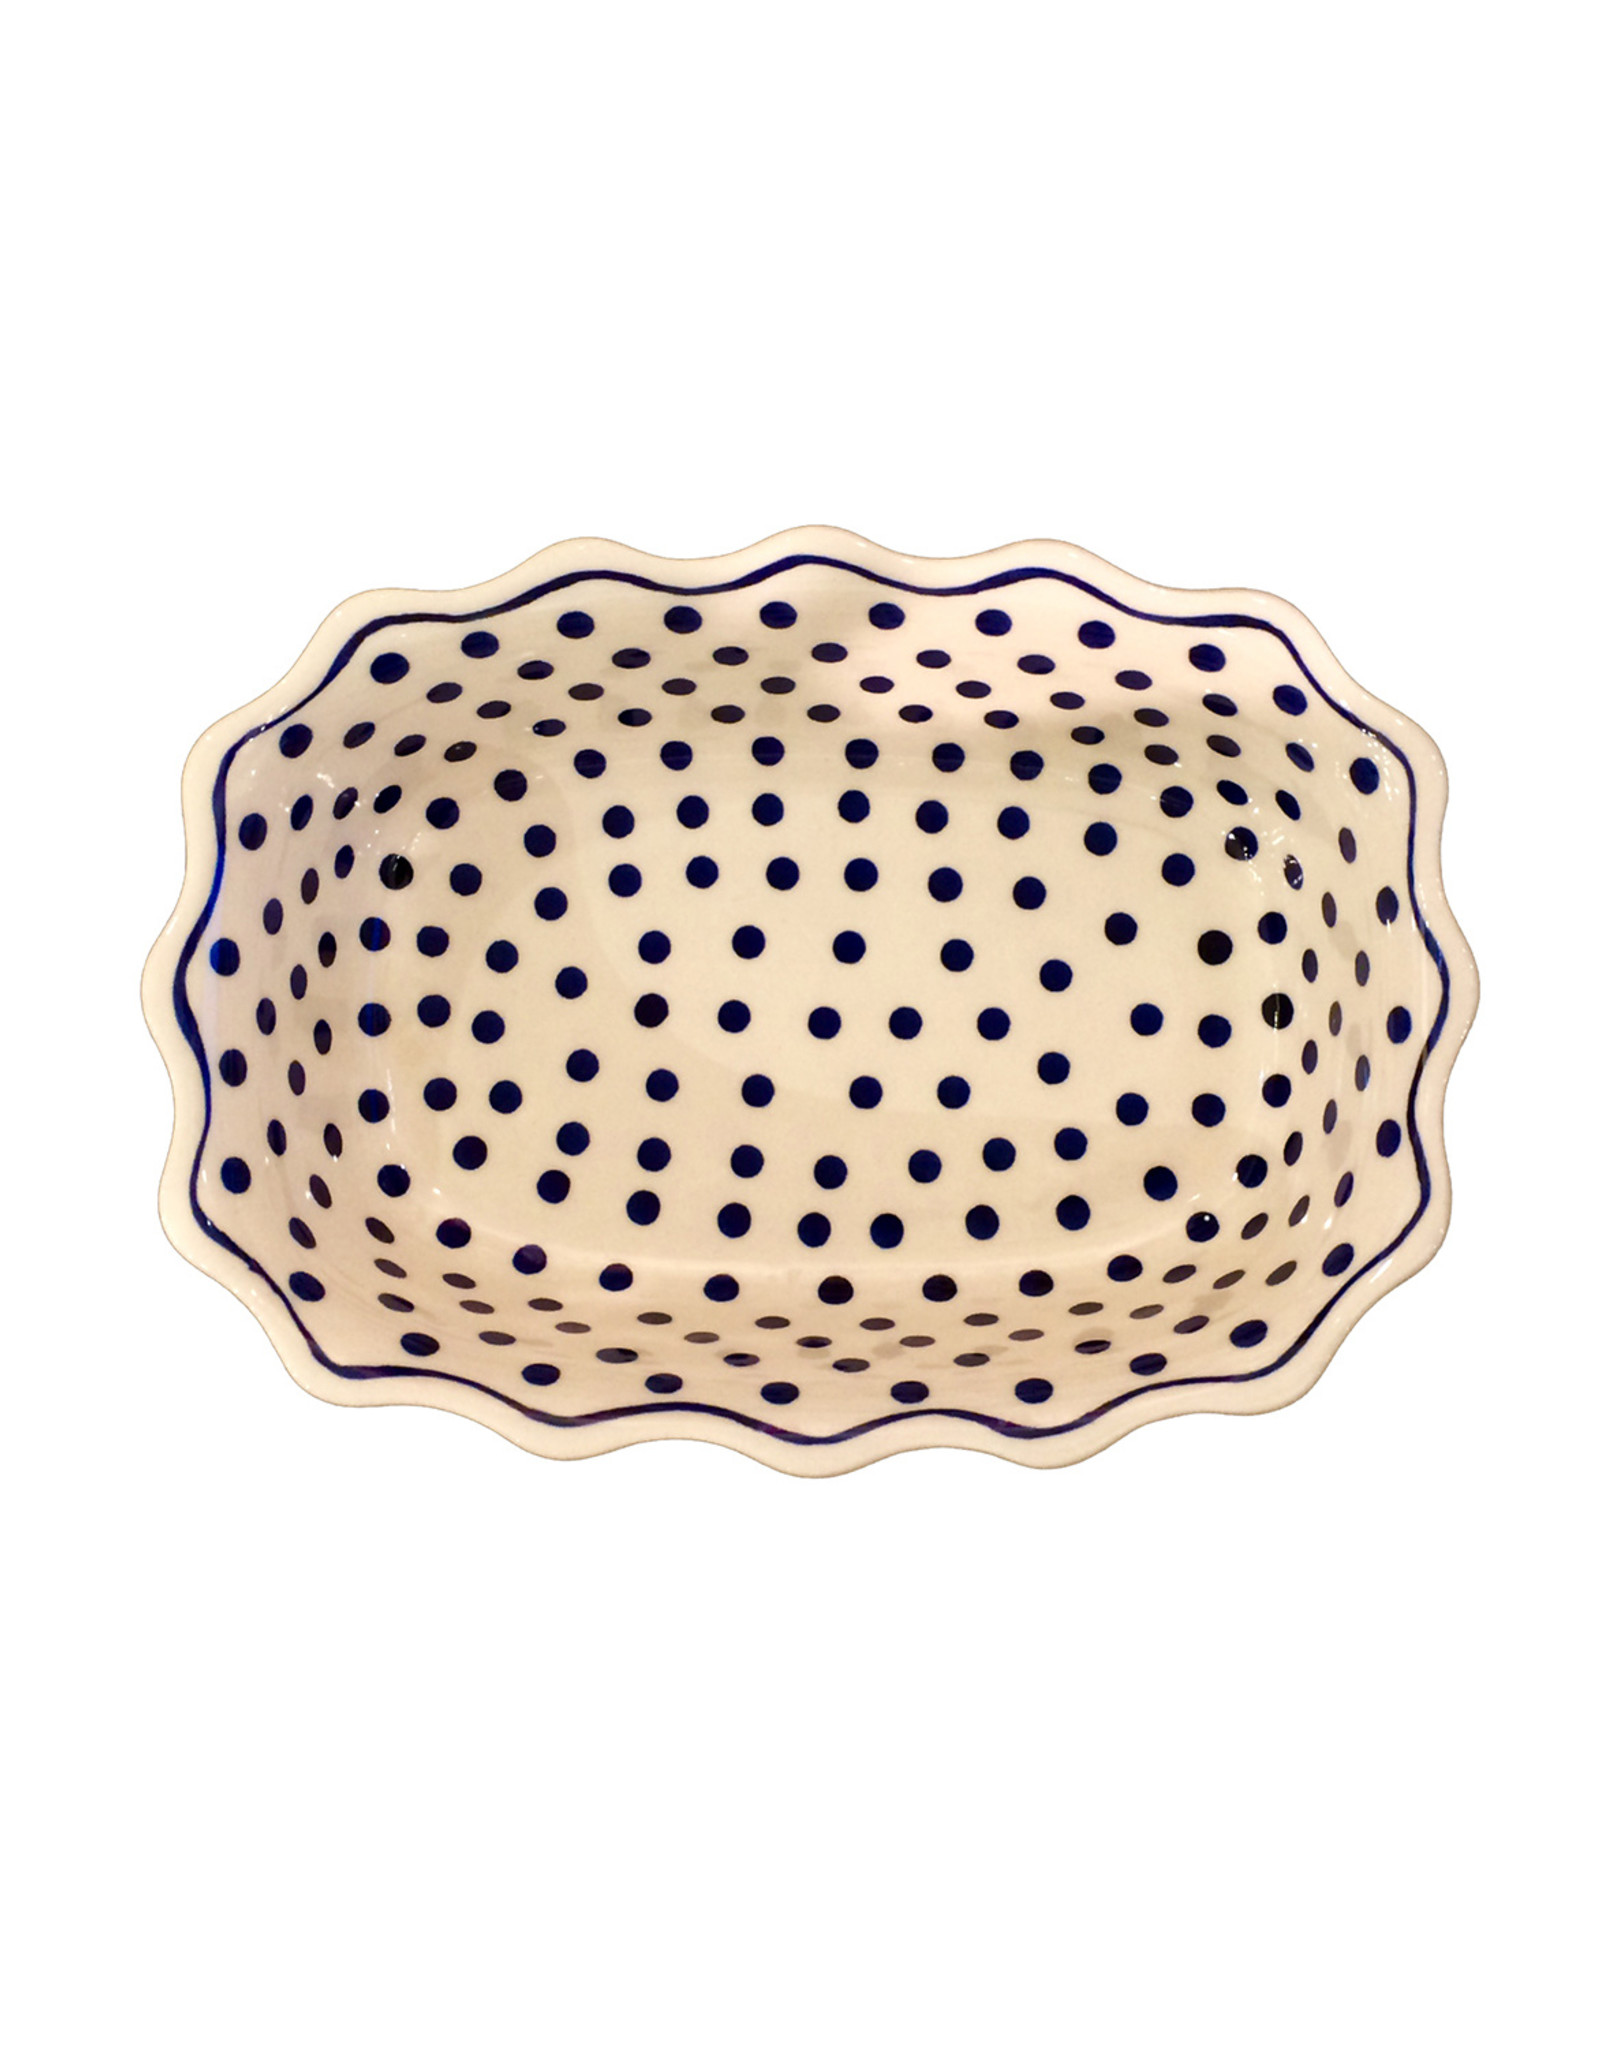 Scalloped Casserole / Dish: White w/ Blue Dots